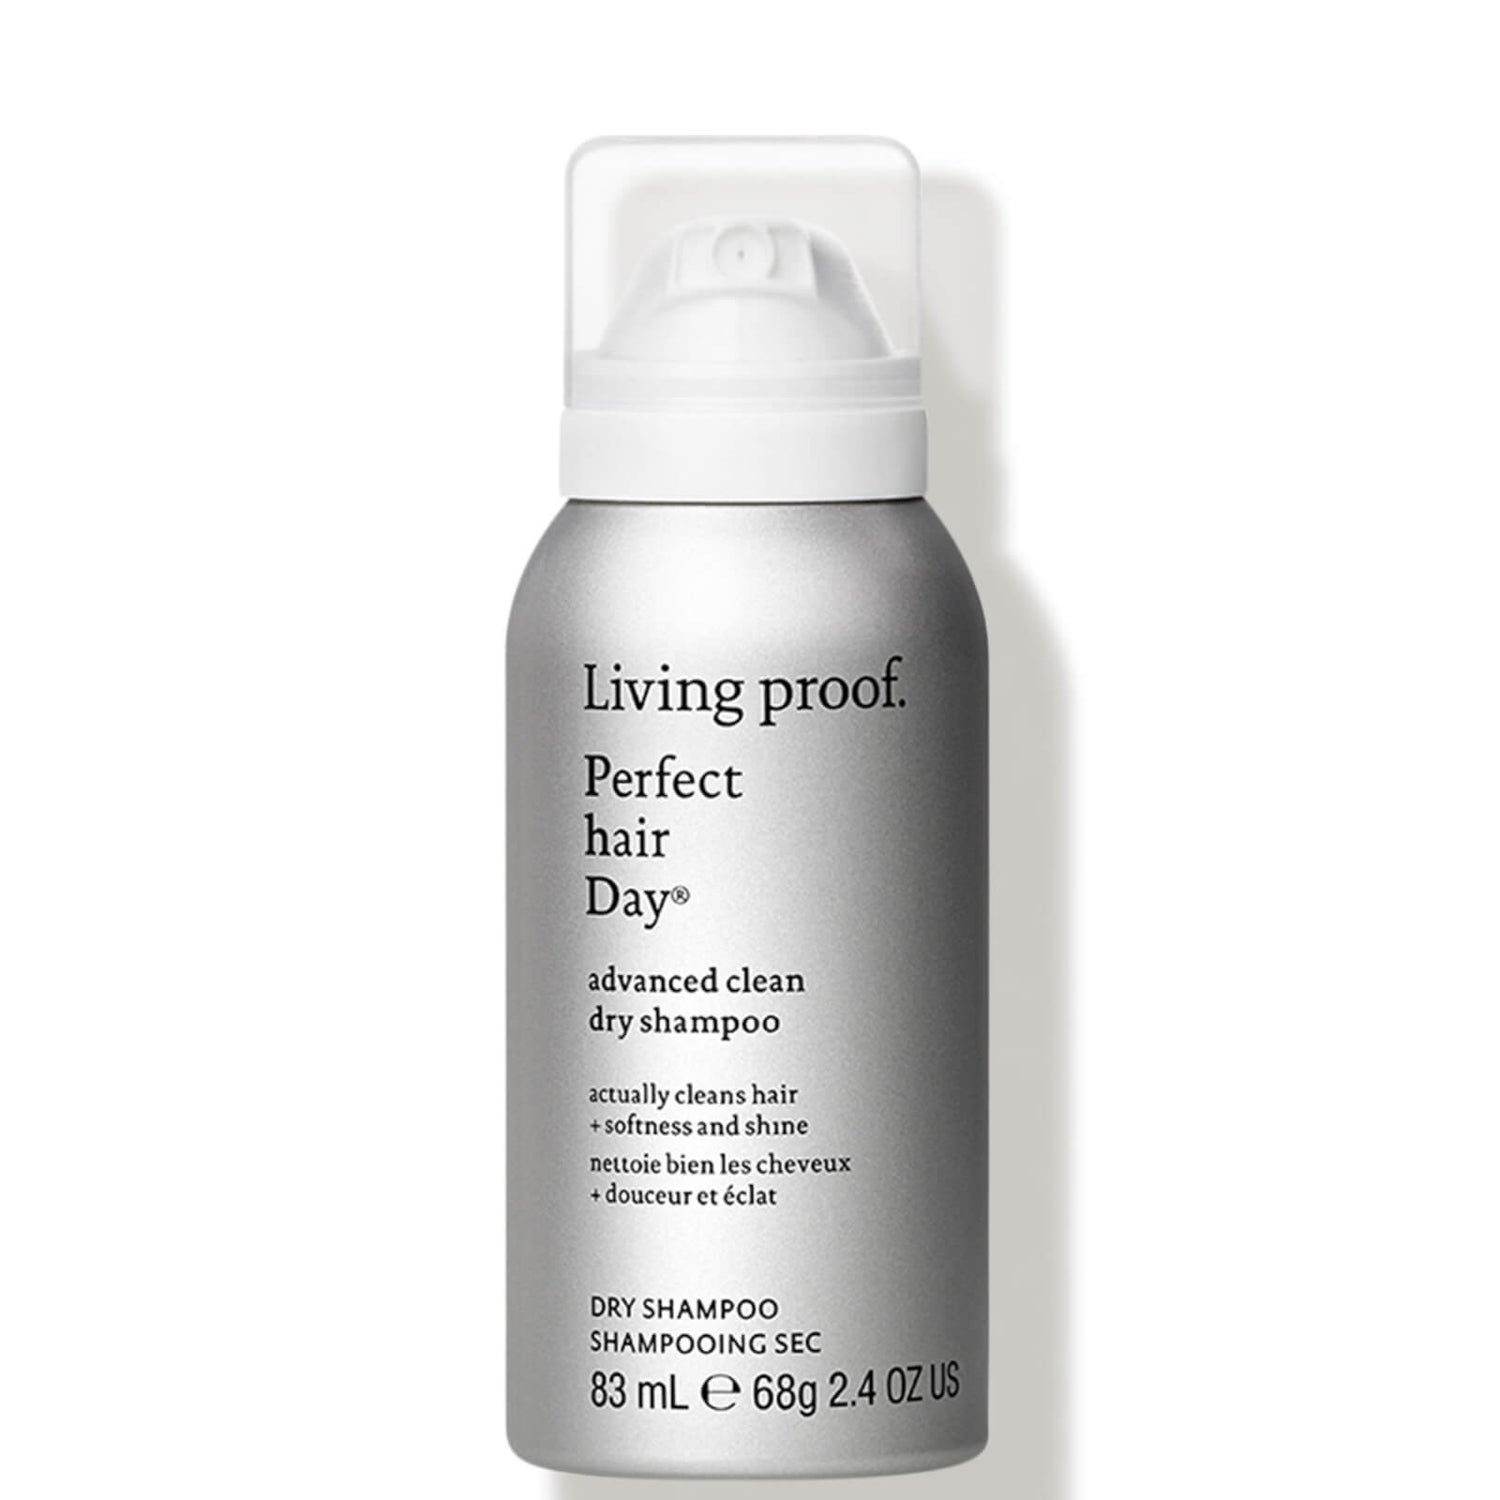 Living Proof Perfect hair Day (PhD) Advanced Clean Dry Shampoo 2.4 oz.